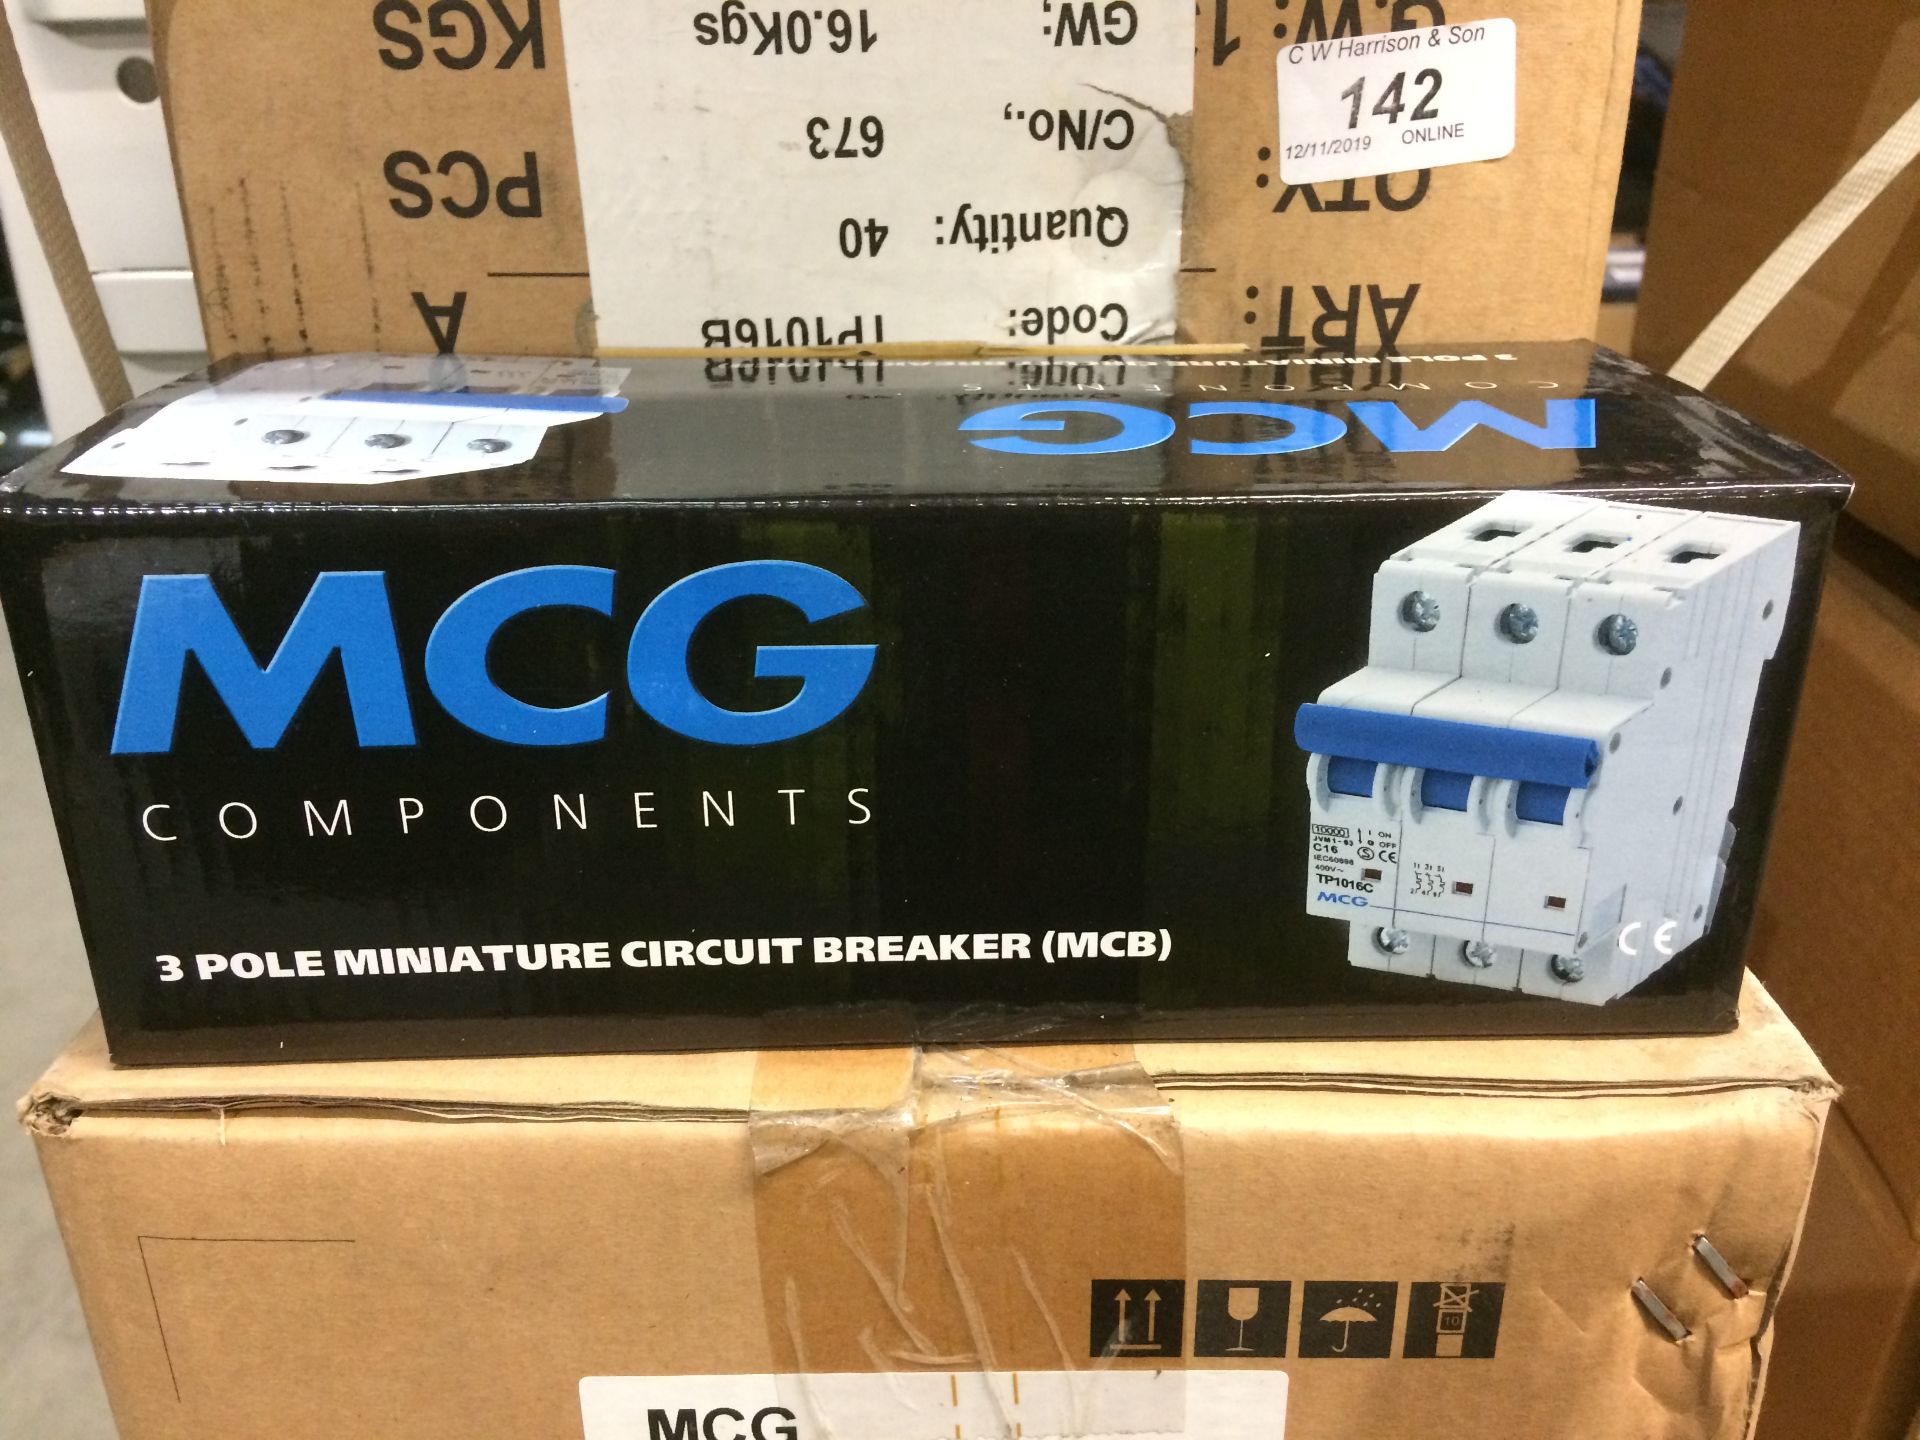 40 x MCG components 3 pole miniature circuit breakers